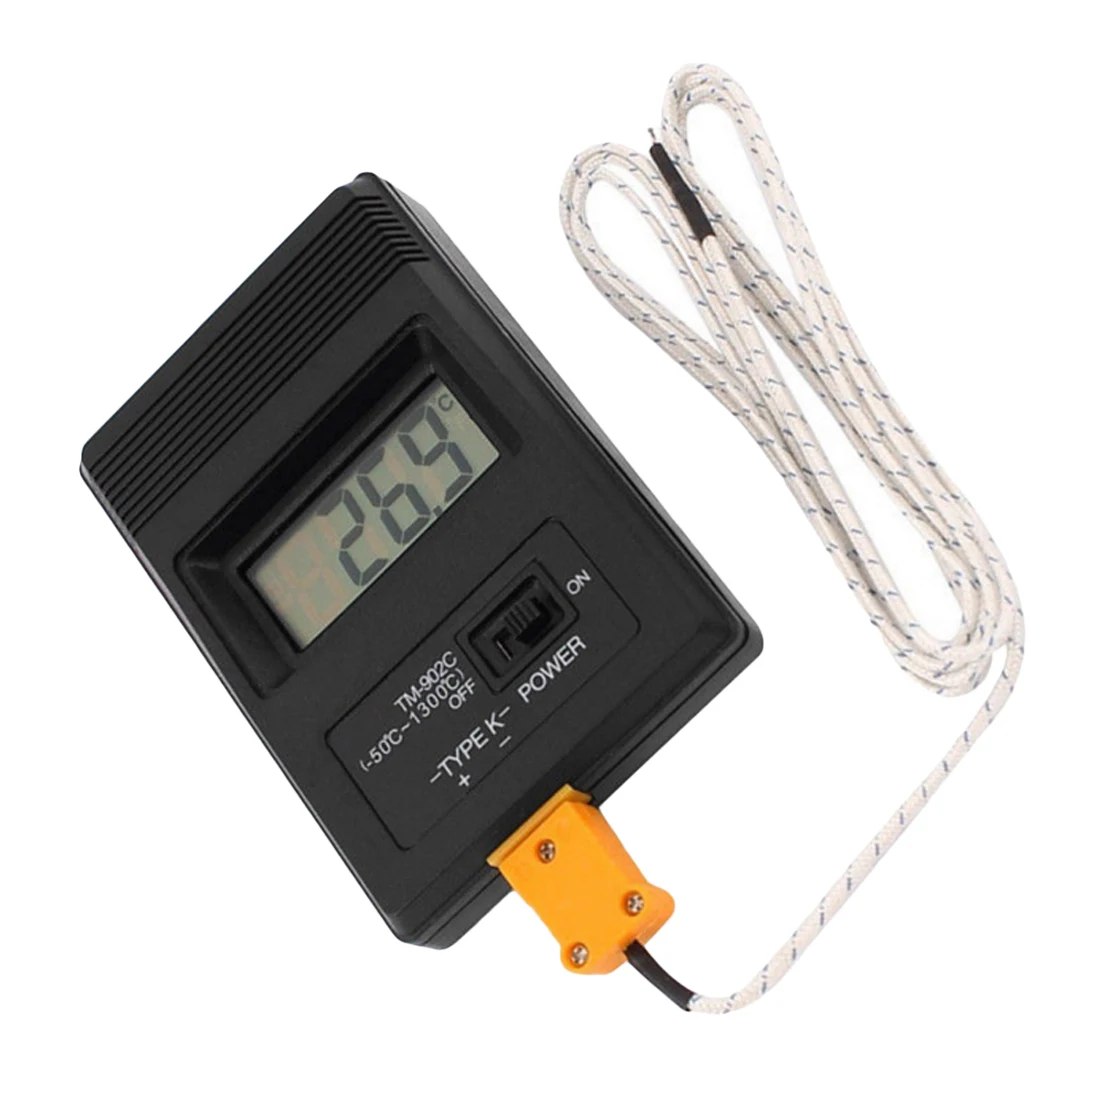 Tip K TM902C Termometru Digital Tester Temperatura Metru Senzor Termometru Ac Sonda -50C - 1300C Pentru Fabrica/ Laborator/ Home